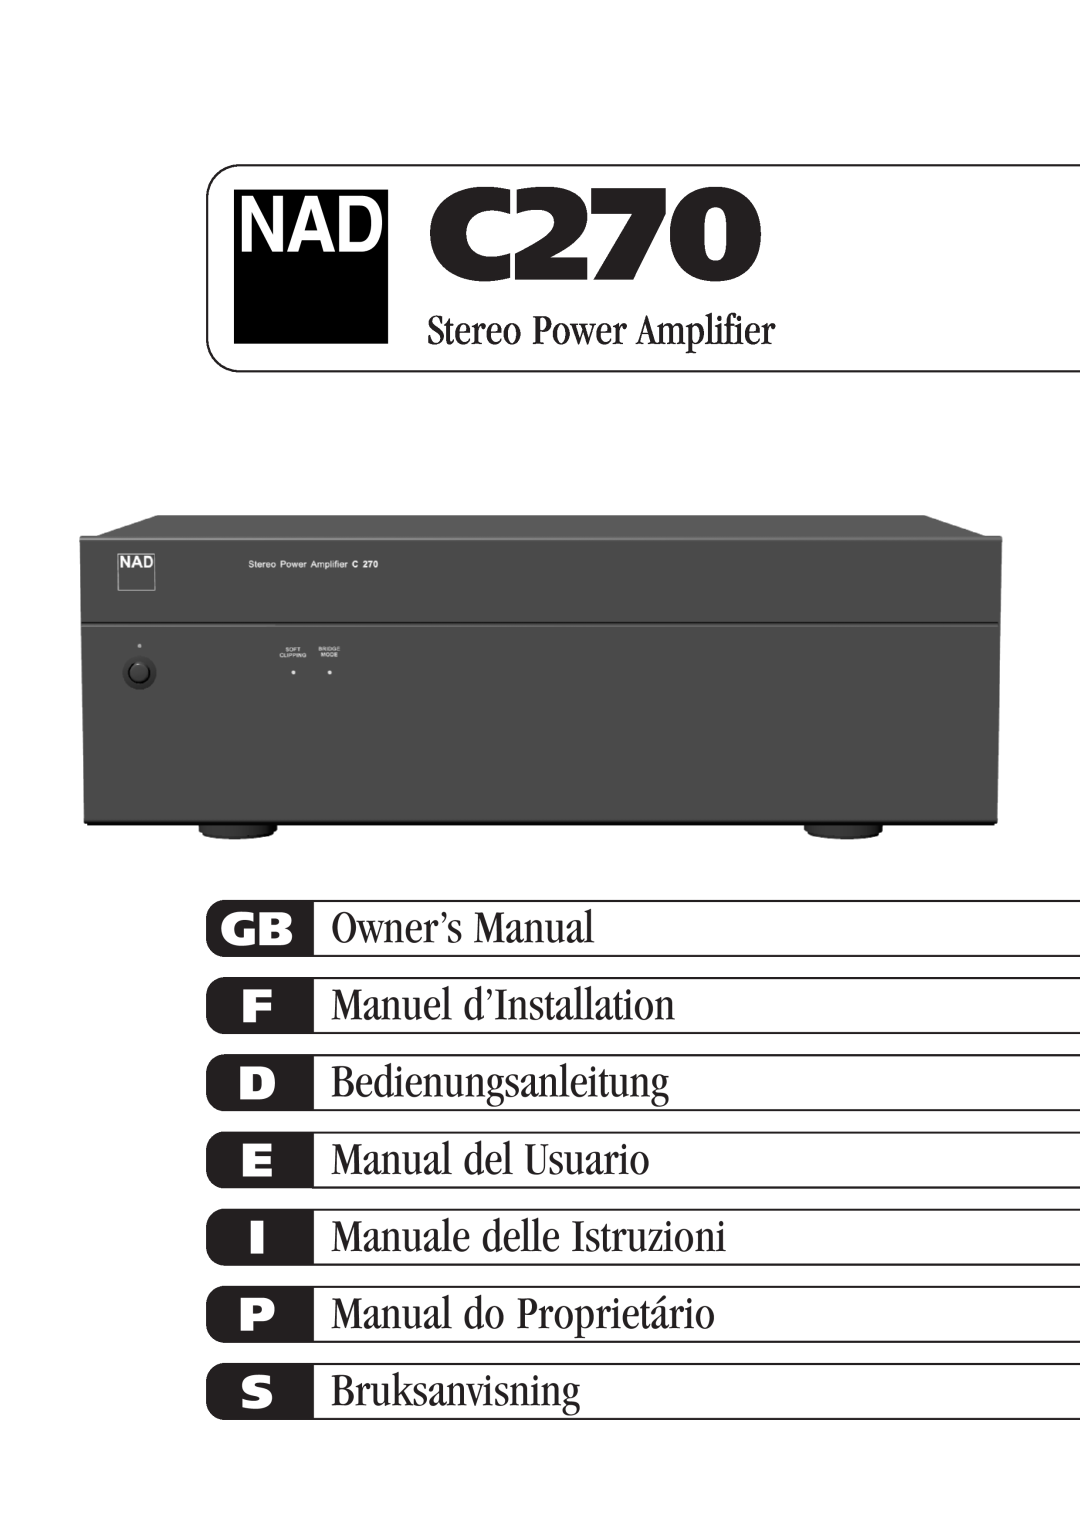 NAD C270 owner manual Gb F D E I P S, Bedienungsanleitung Manual del Usuario, Bruksanvisning, Stereo Power Amplifier 